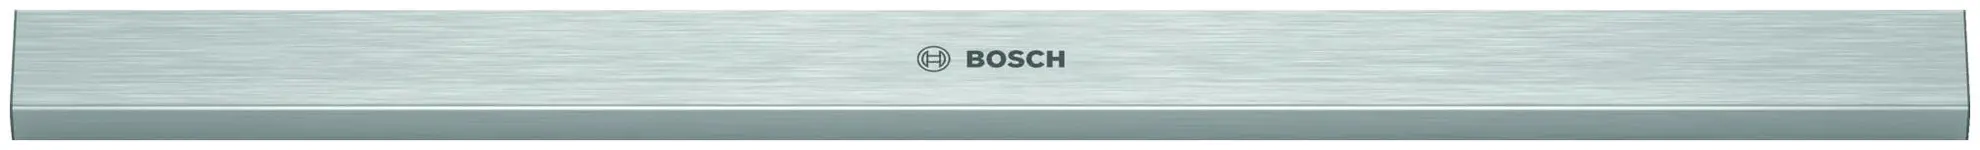 BOSCH-DSZ4685-Afzuigkap accessoires